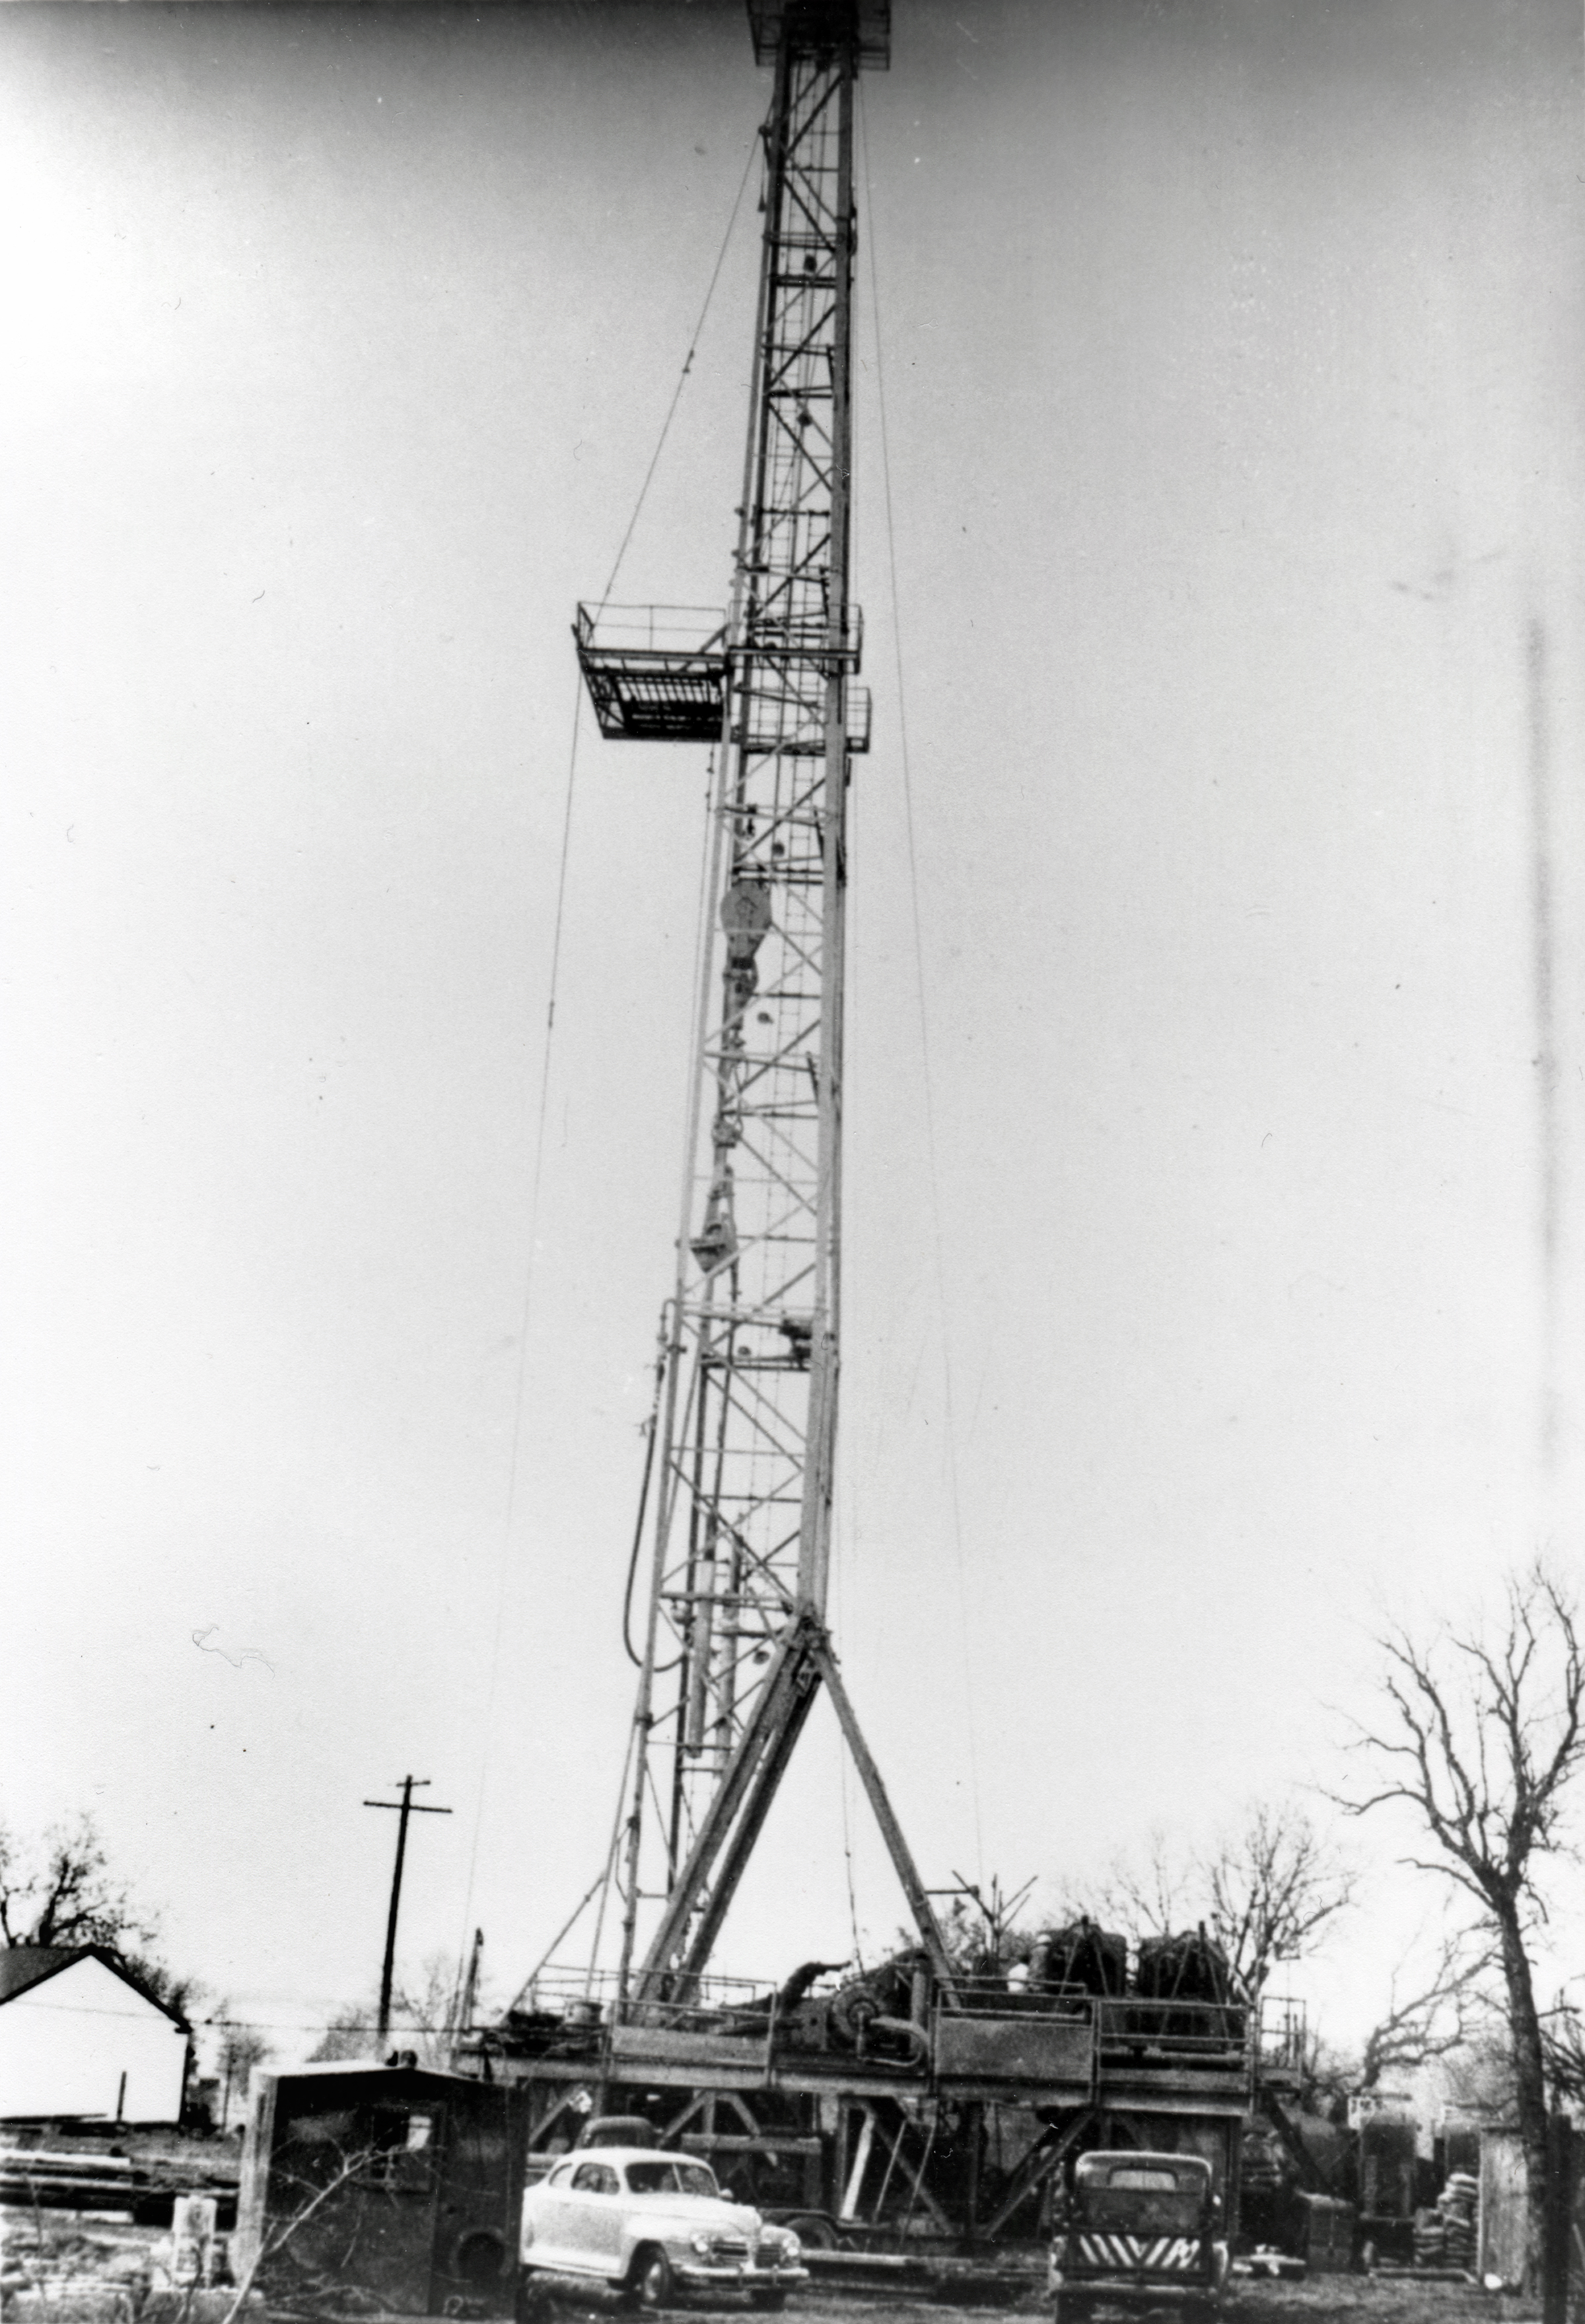 Arcadia-Wayman Street Oil Boom, 1948-1949